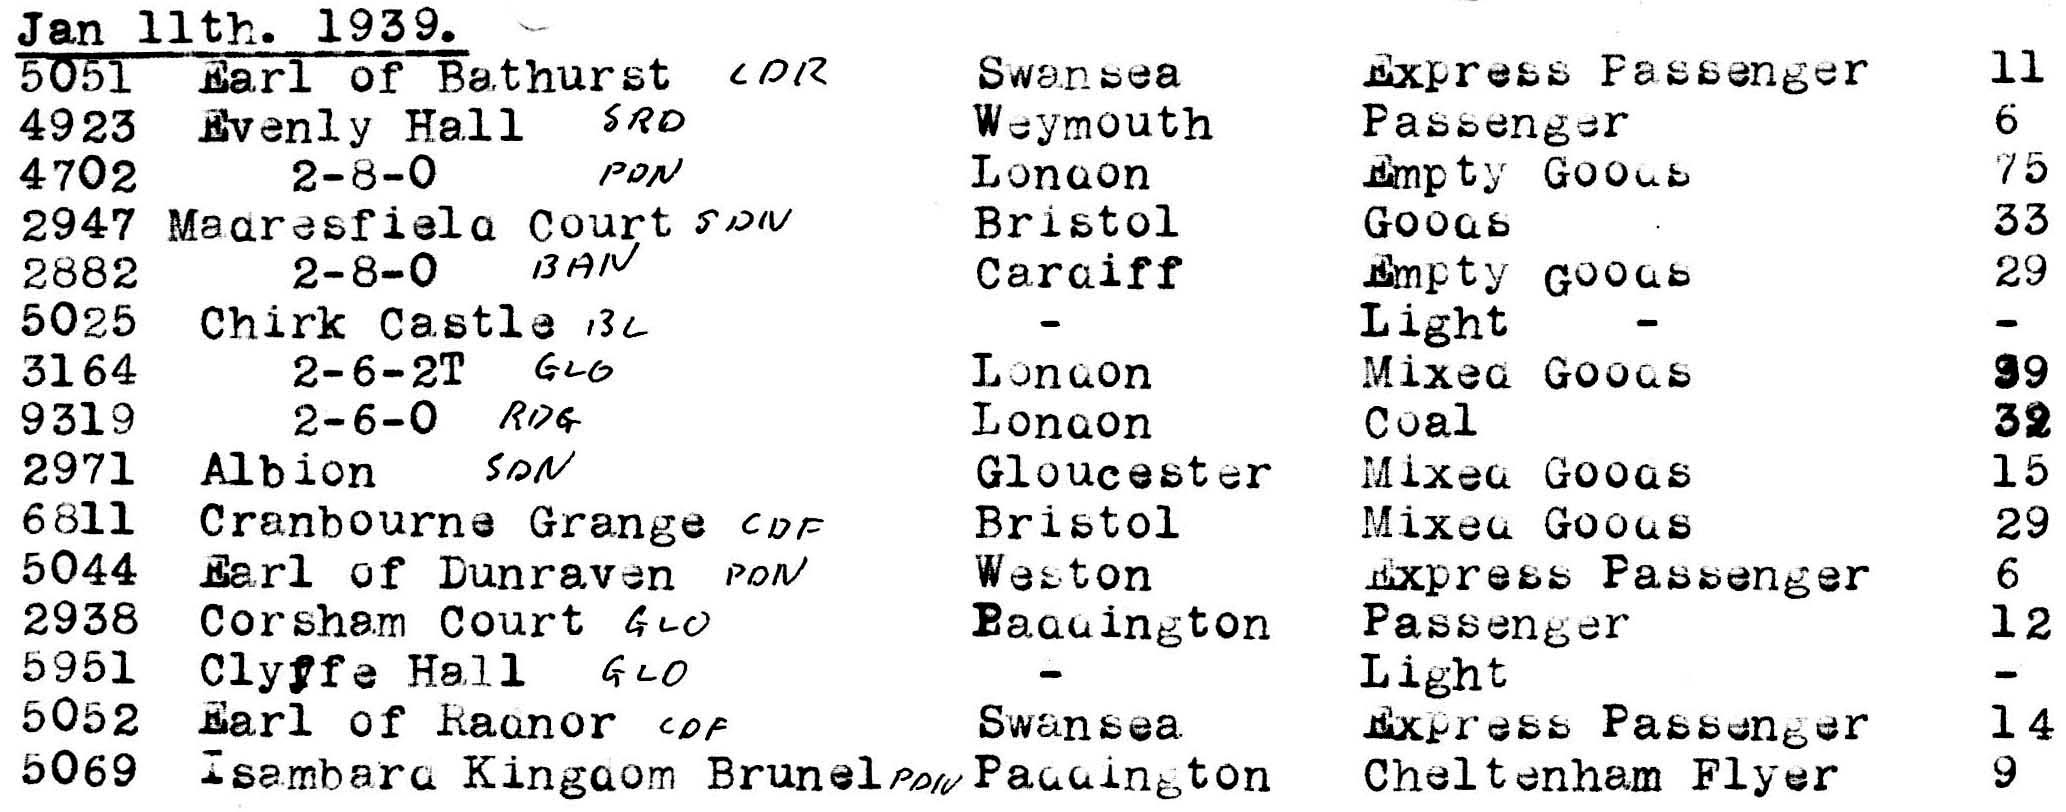 Swindon 11th January 1939.